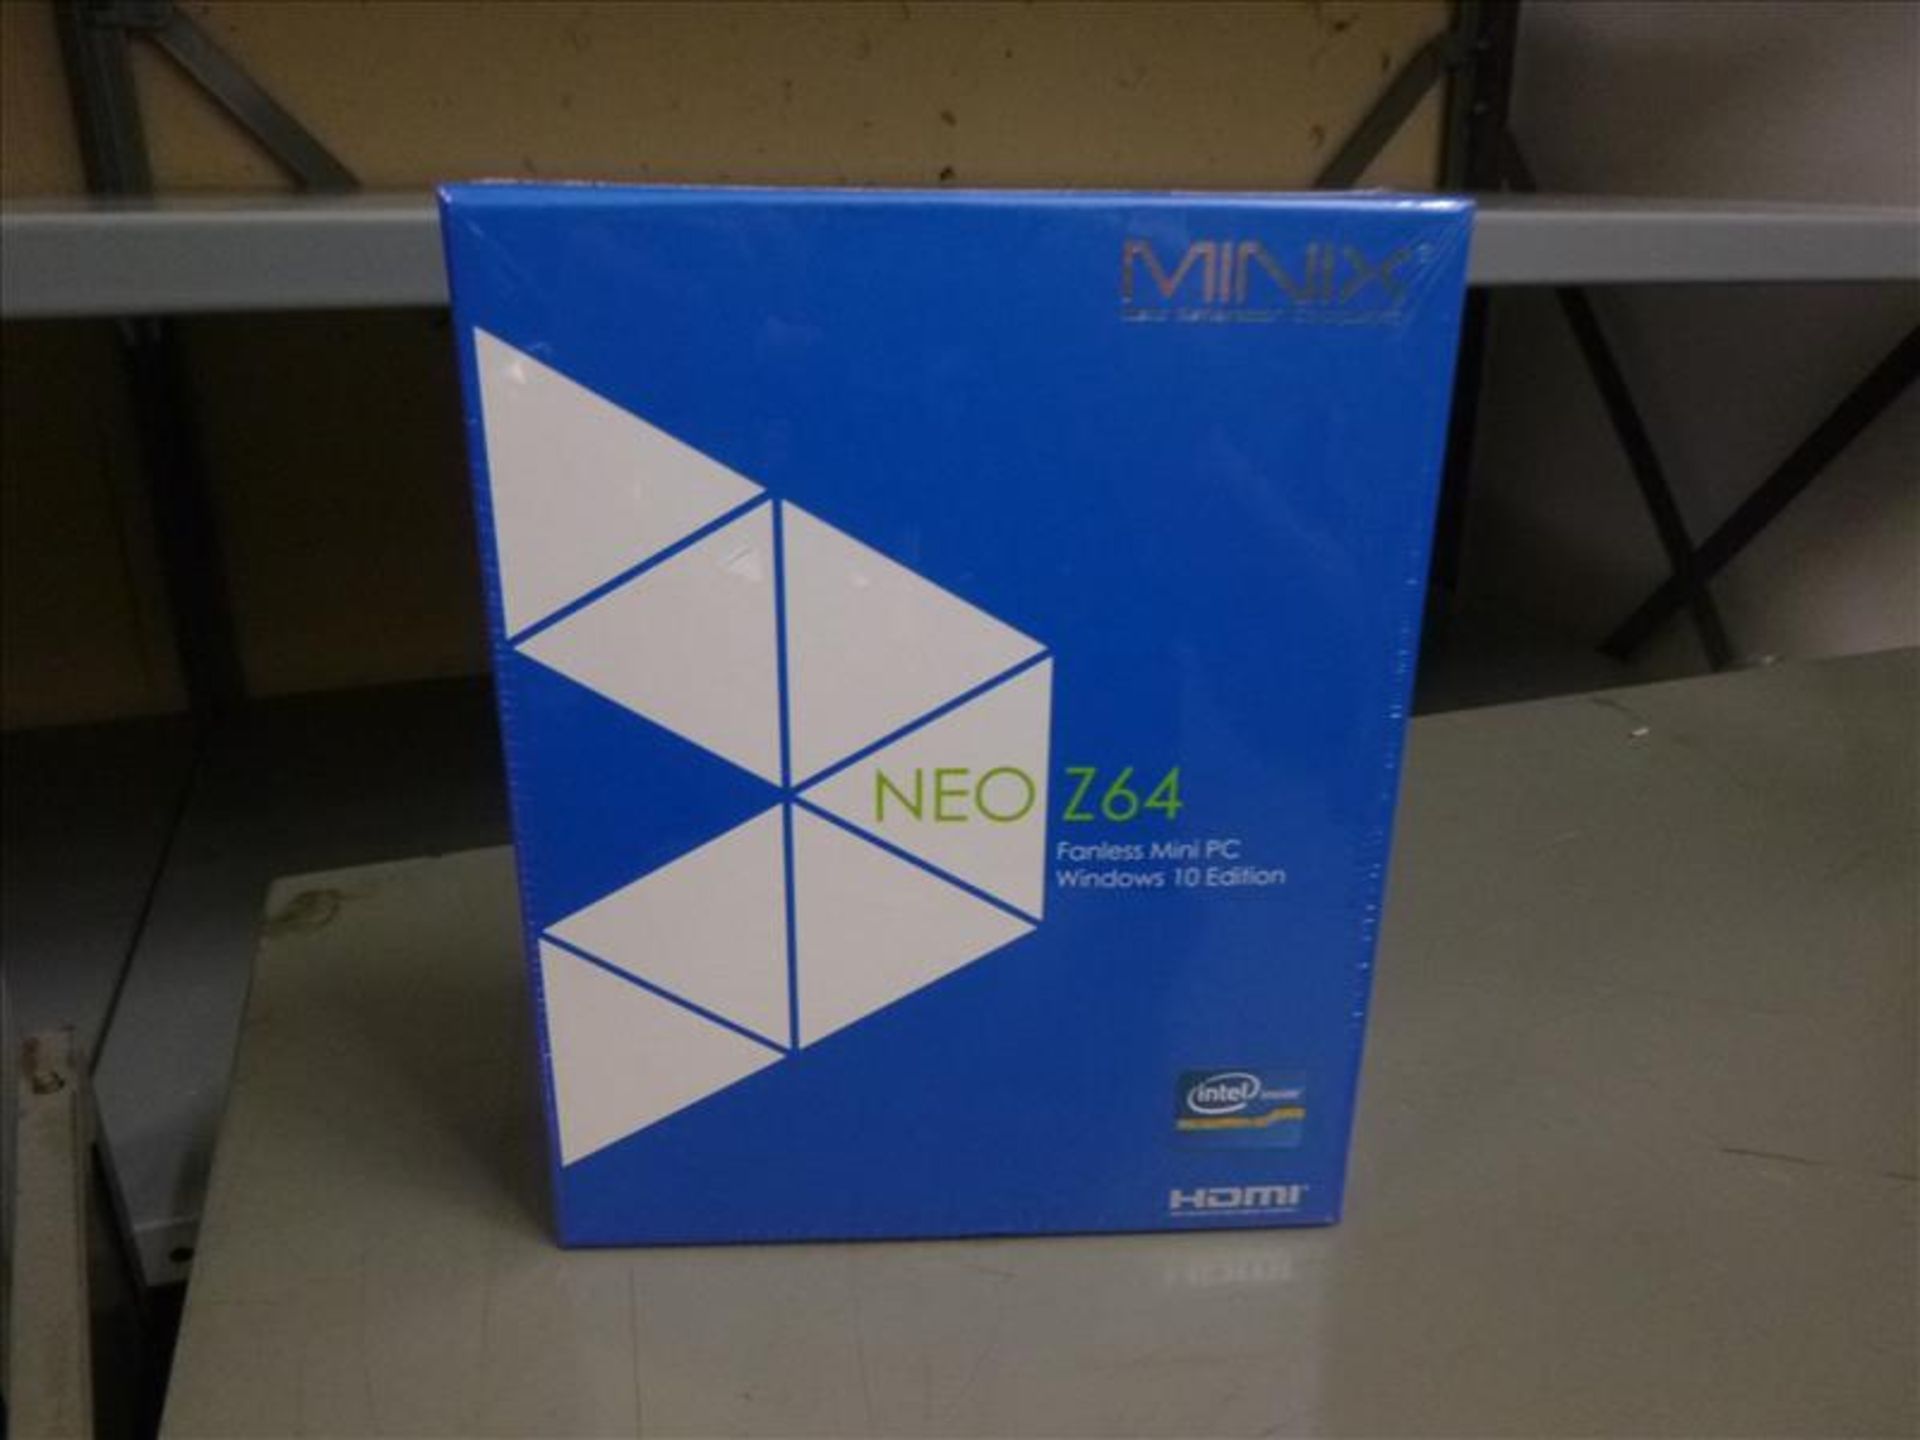 (2) Minx Neo Z64 fanless mini PCs, Window 10, Intel Z3735F processor, 2GB memory, 32 GB storage,